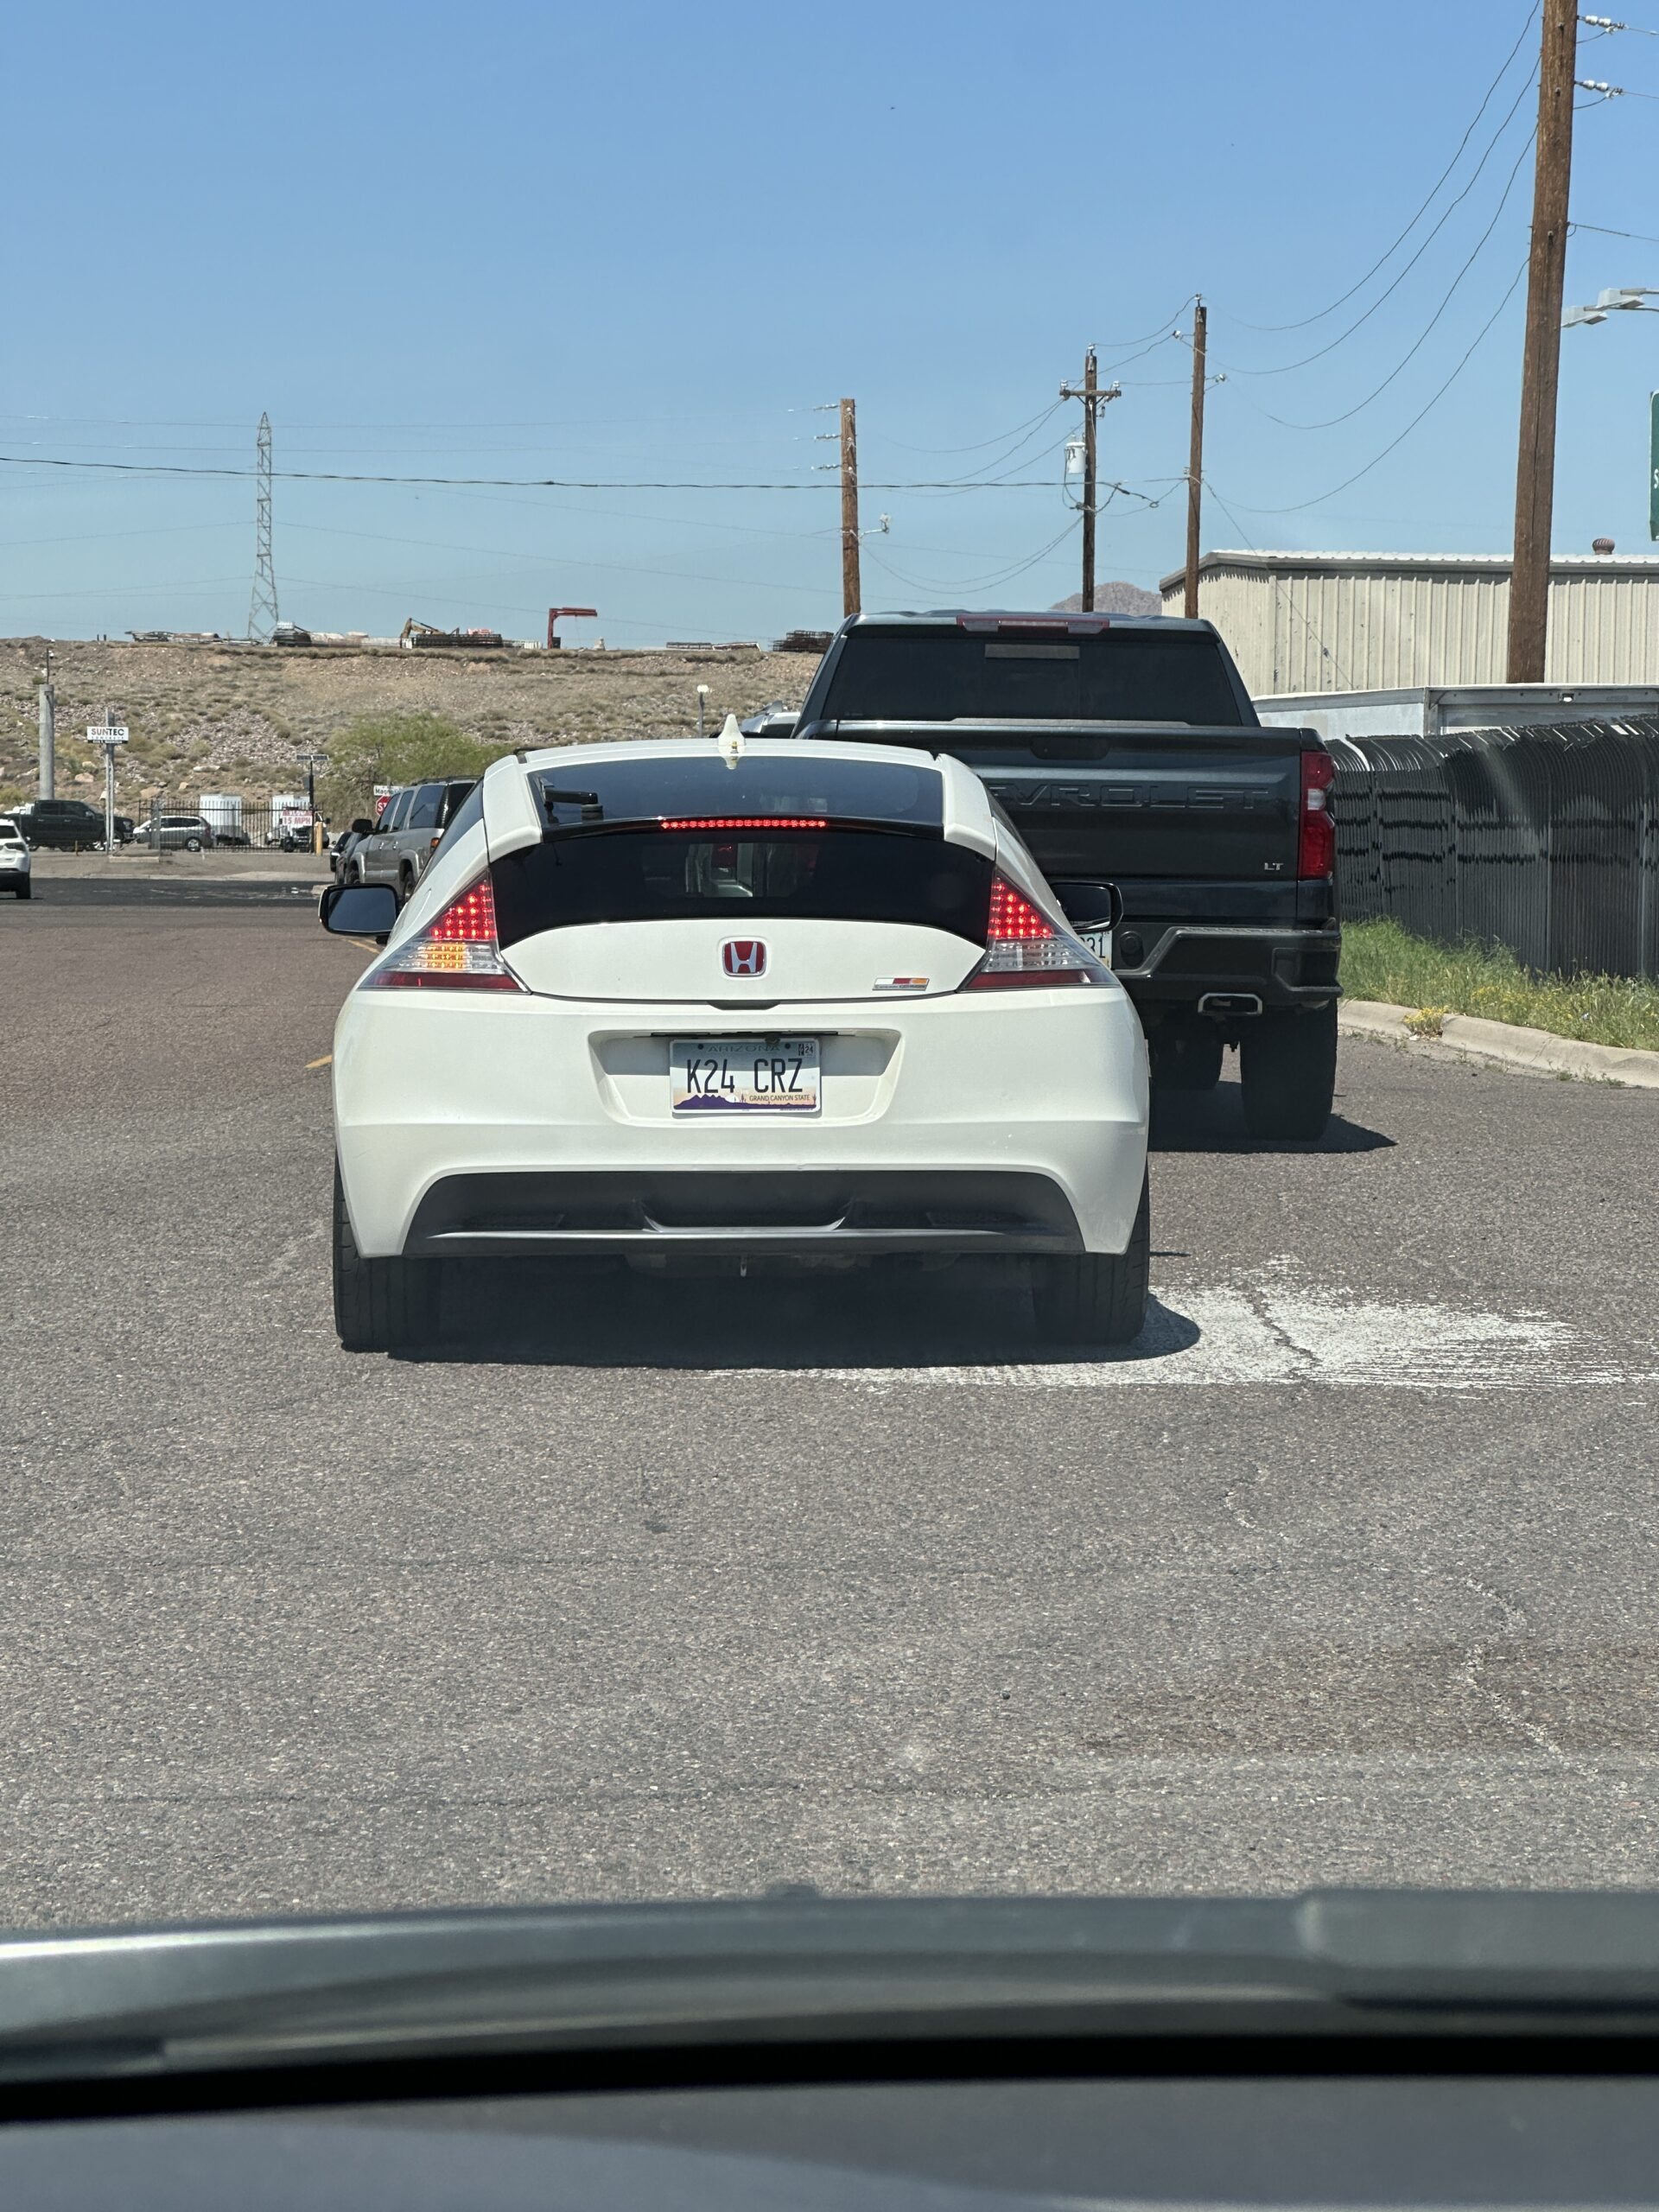 Honda CR-Z rear end with an Arizona license plate reading "K24 CRZ."